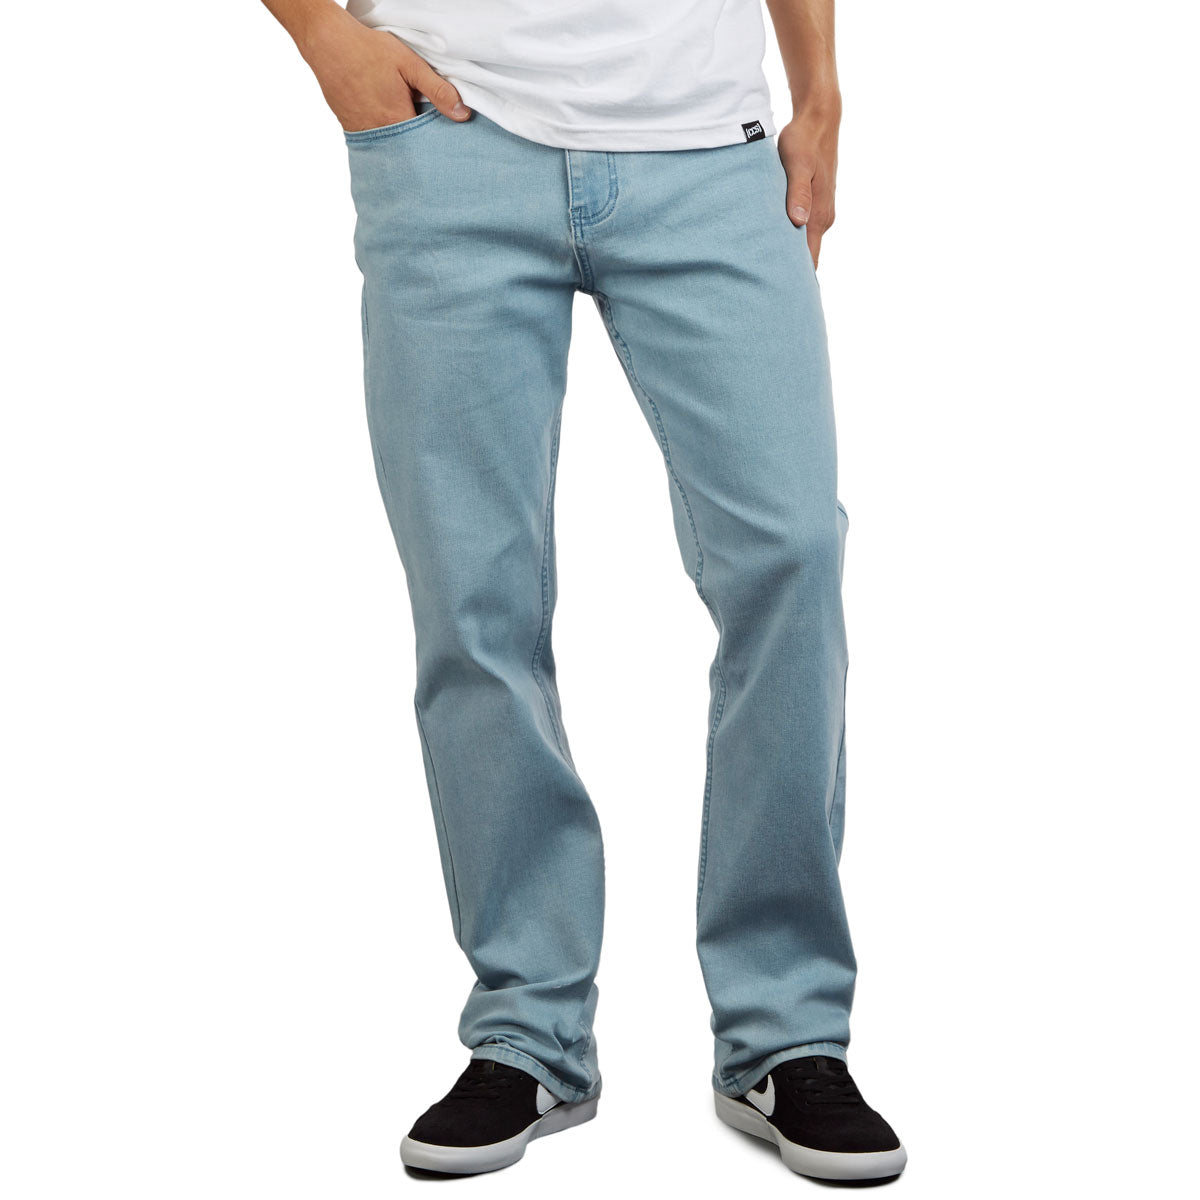 CCS Standard Plus Straight Denim Jeans - New Wash image 1